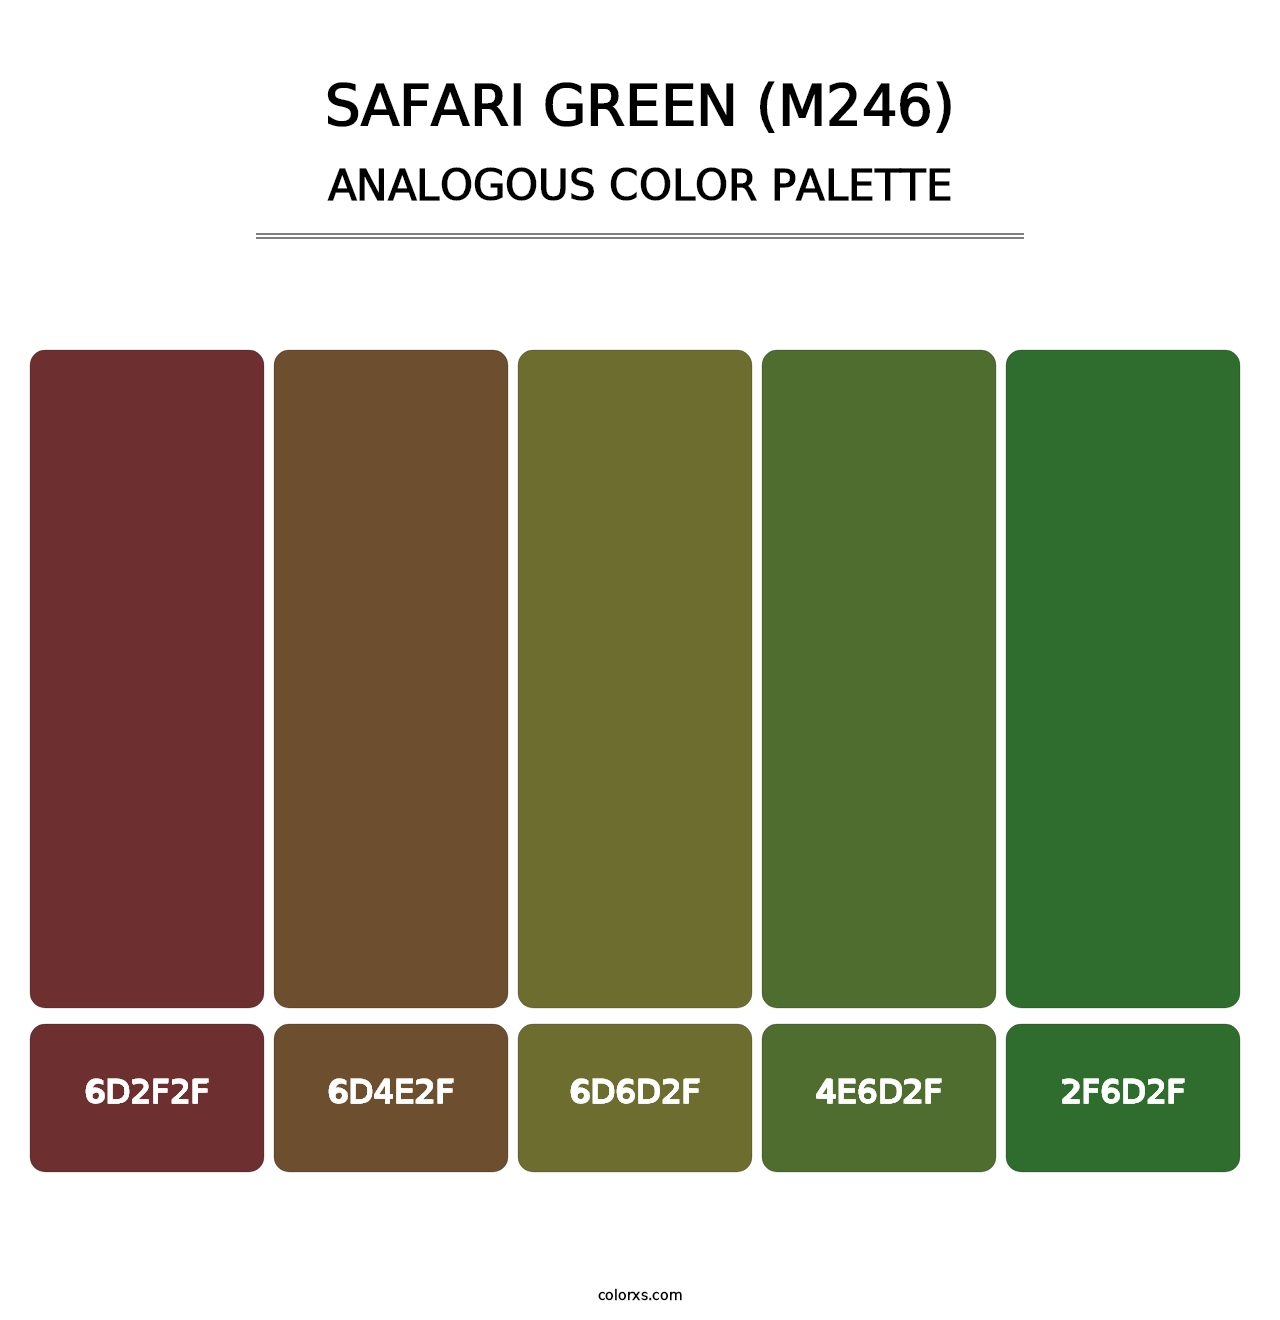 Safari Green (M246) - Analogous Color Palette